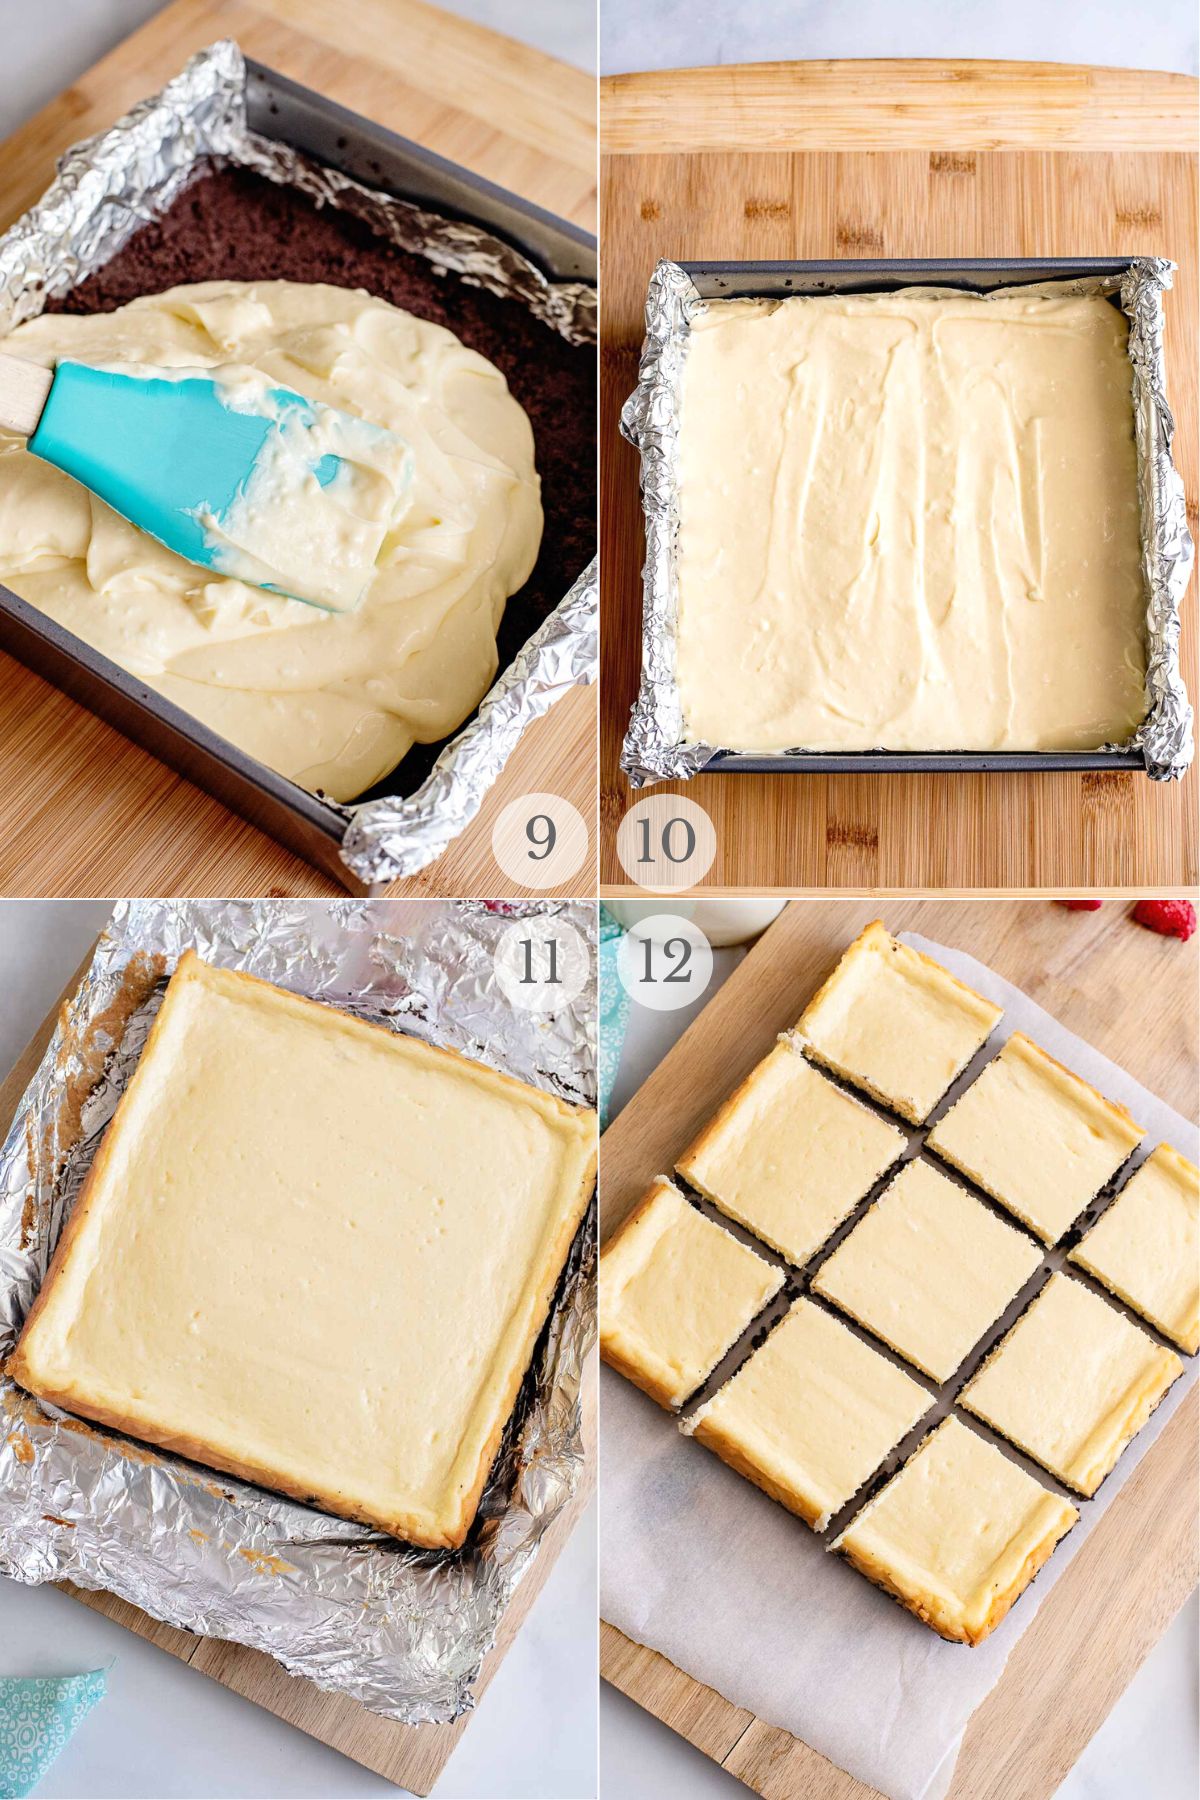 cheesecake bars recipe steps 9-12.